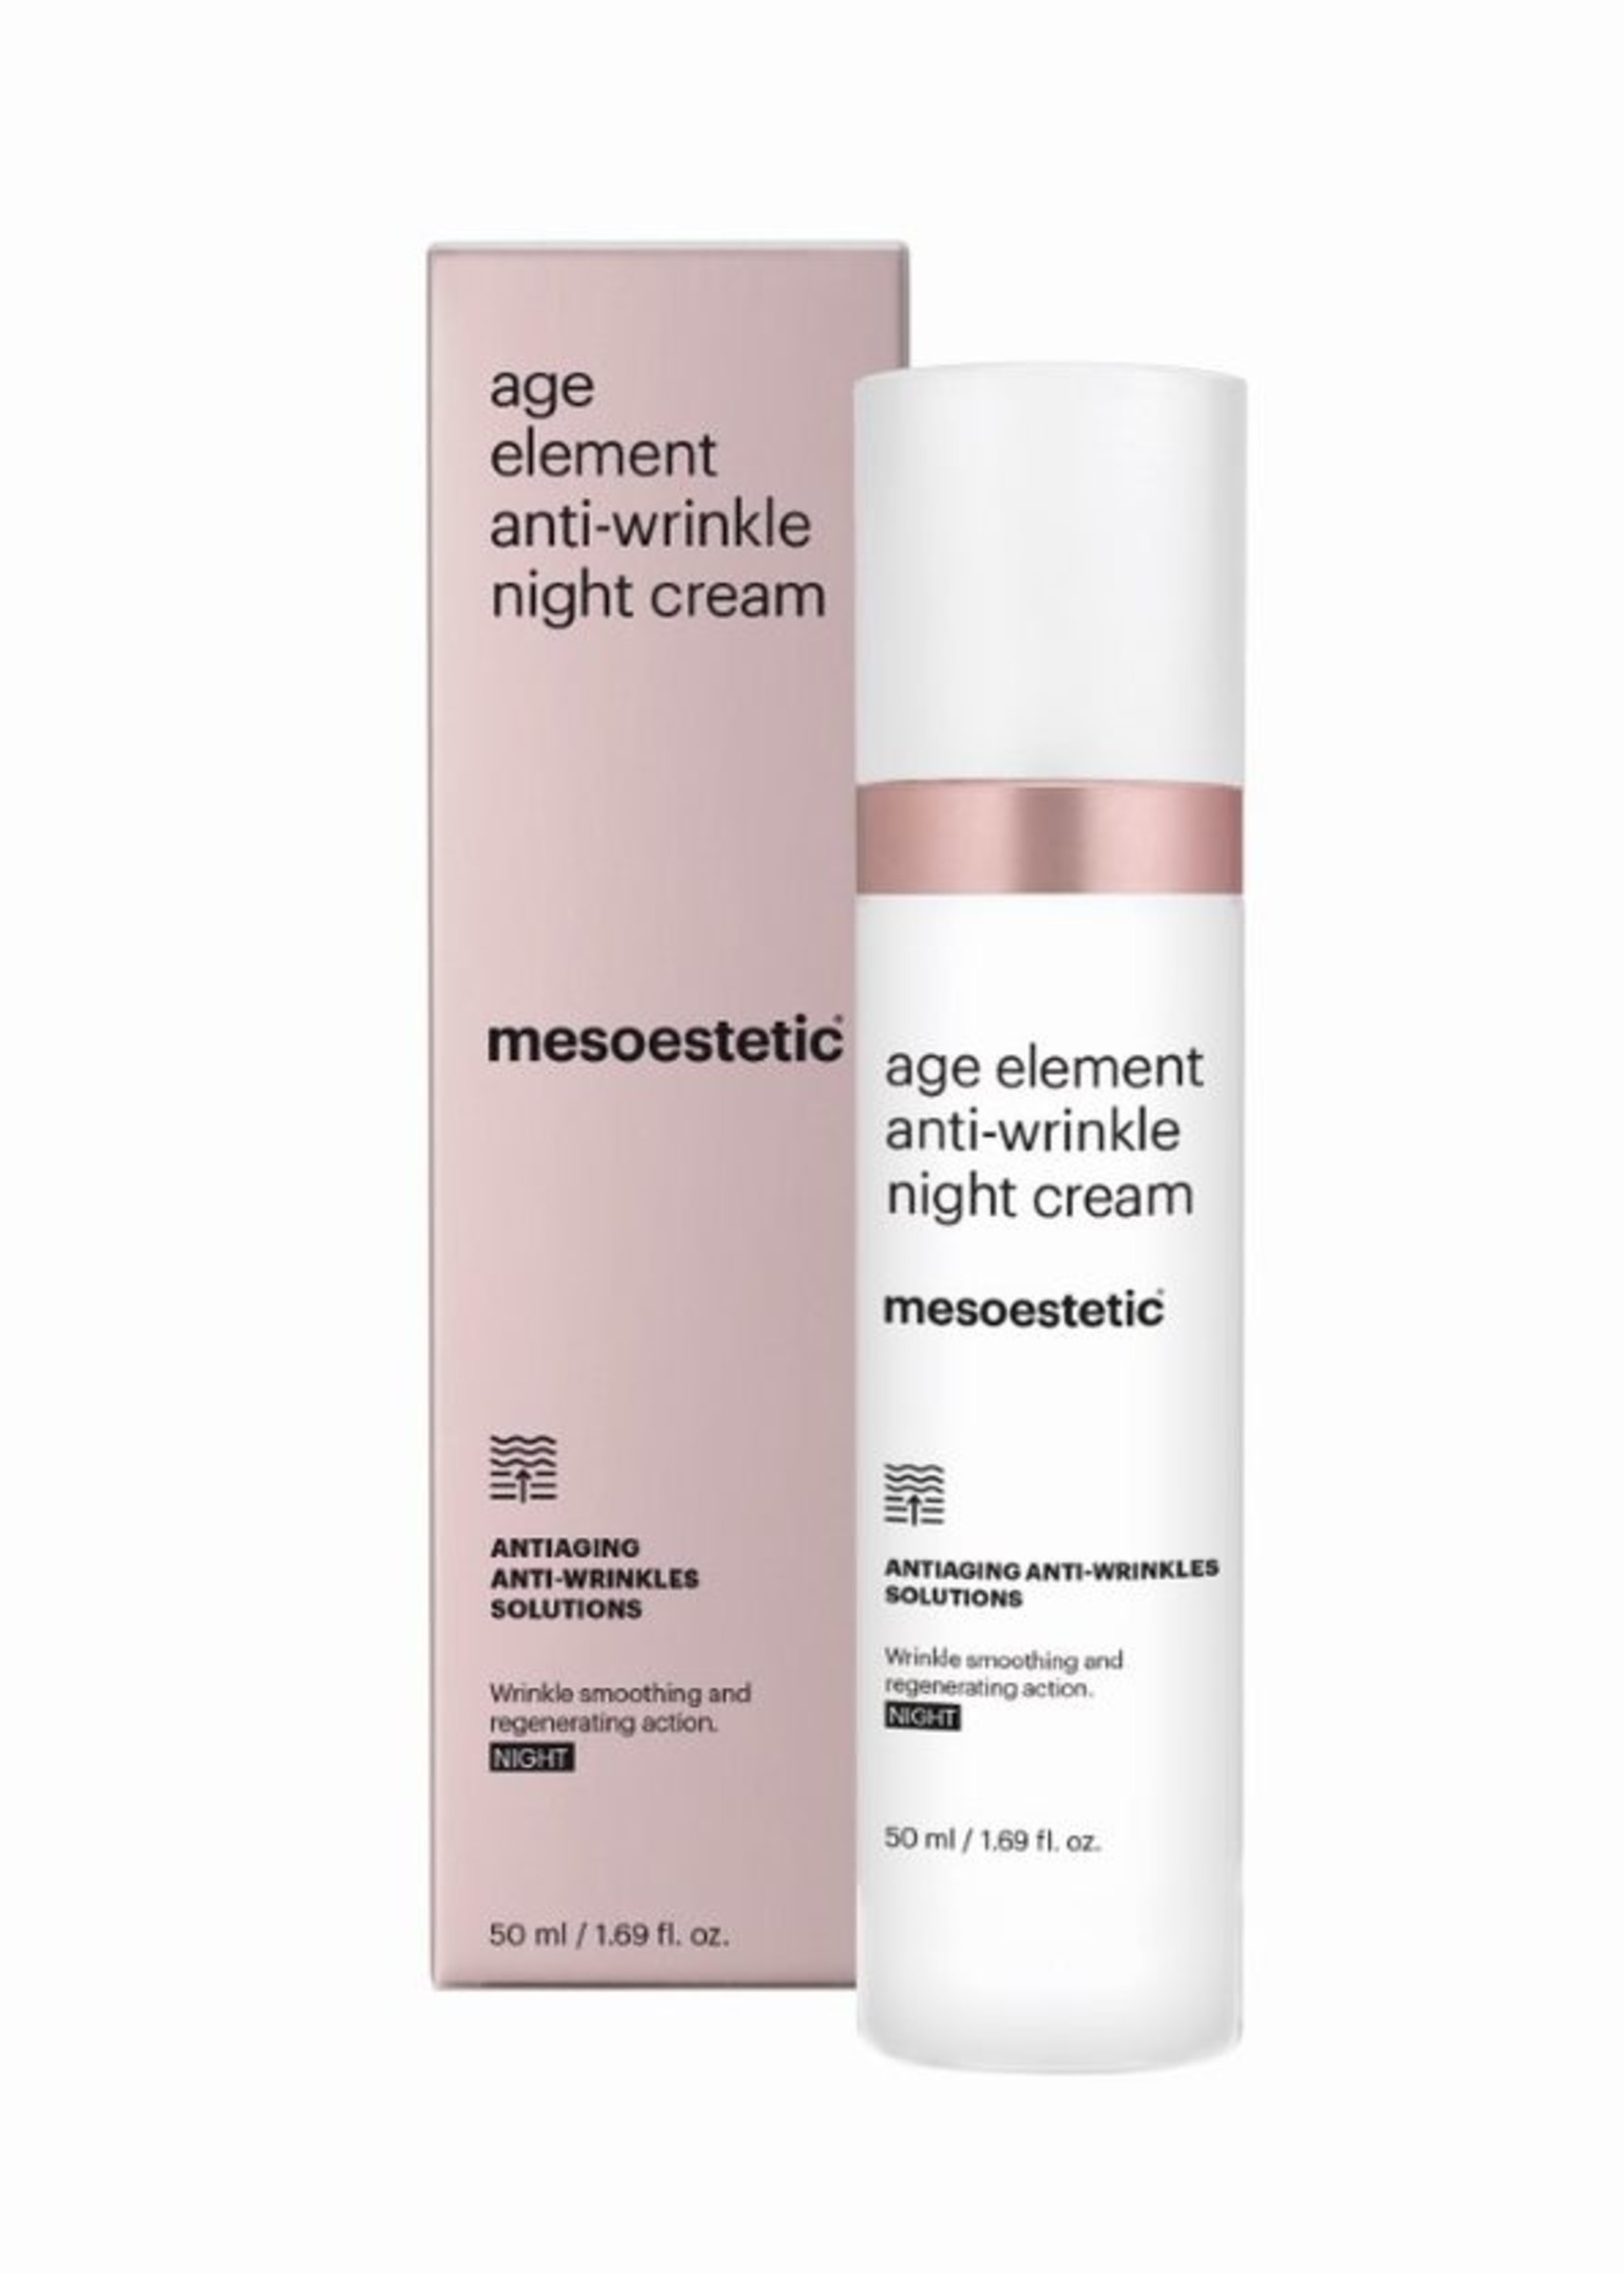 Mesoestetic Age element anti-wrinkle night cream